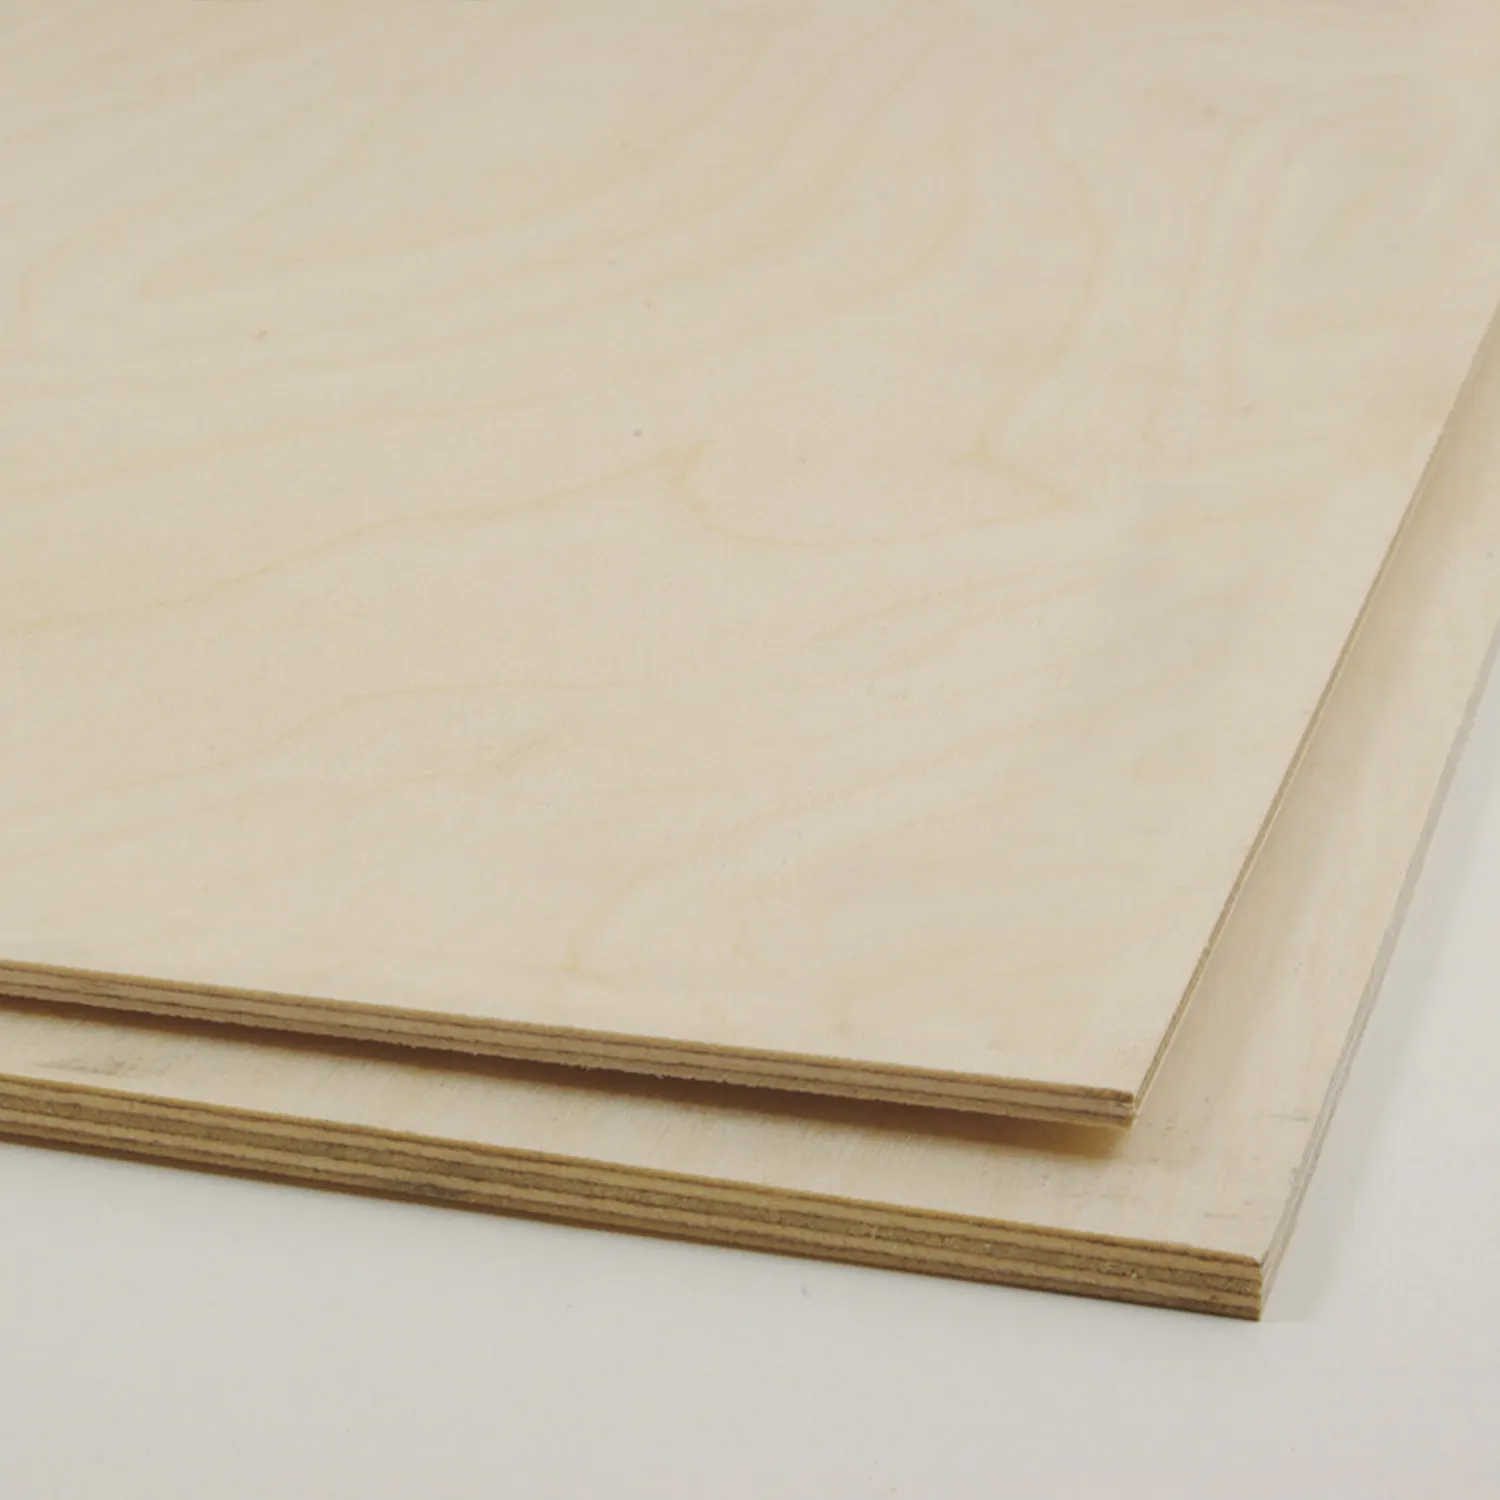 Barang berkualitas tinggi 15mm 4x8ft Baltik birch kayu lapis untuk gembok furnitur